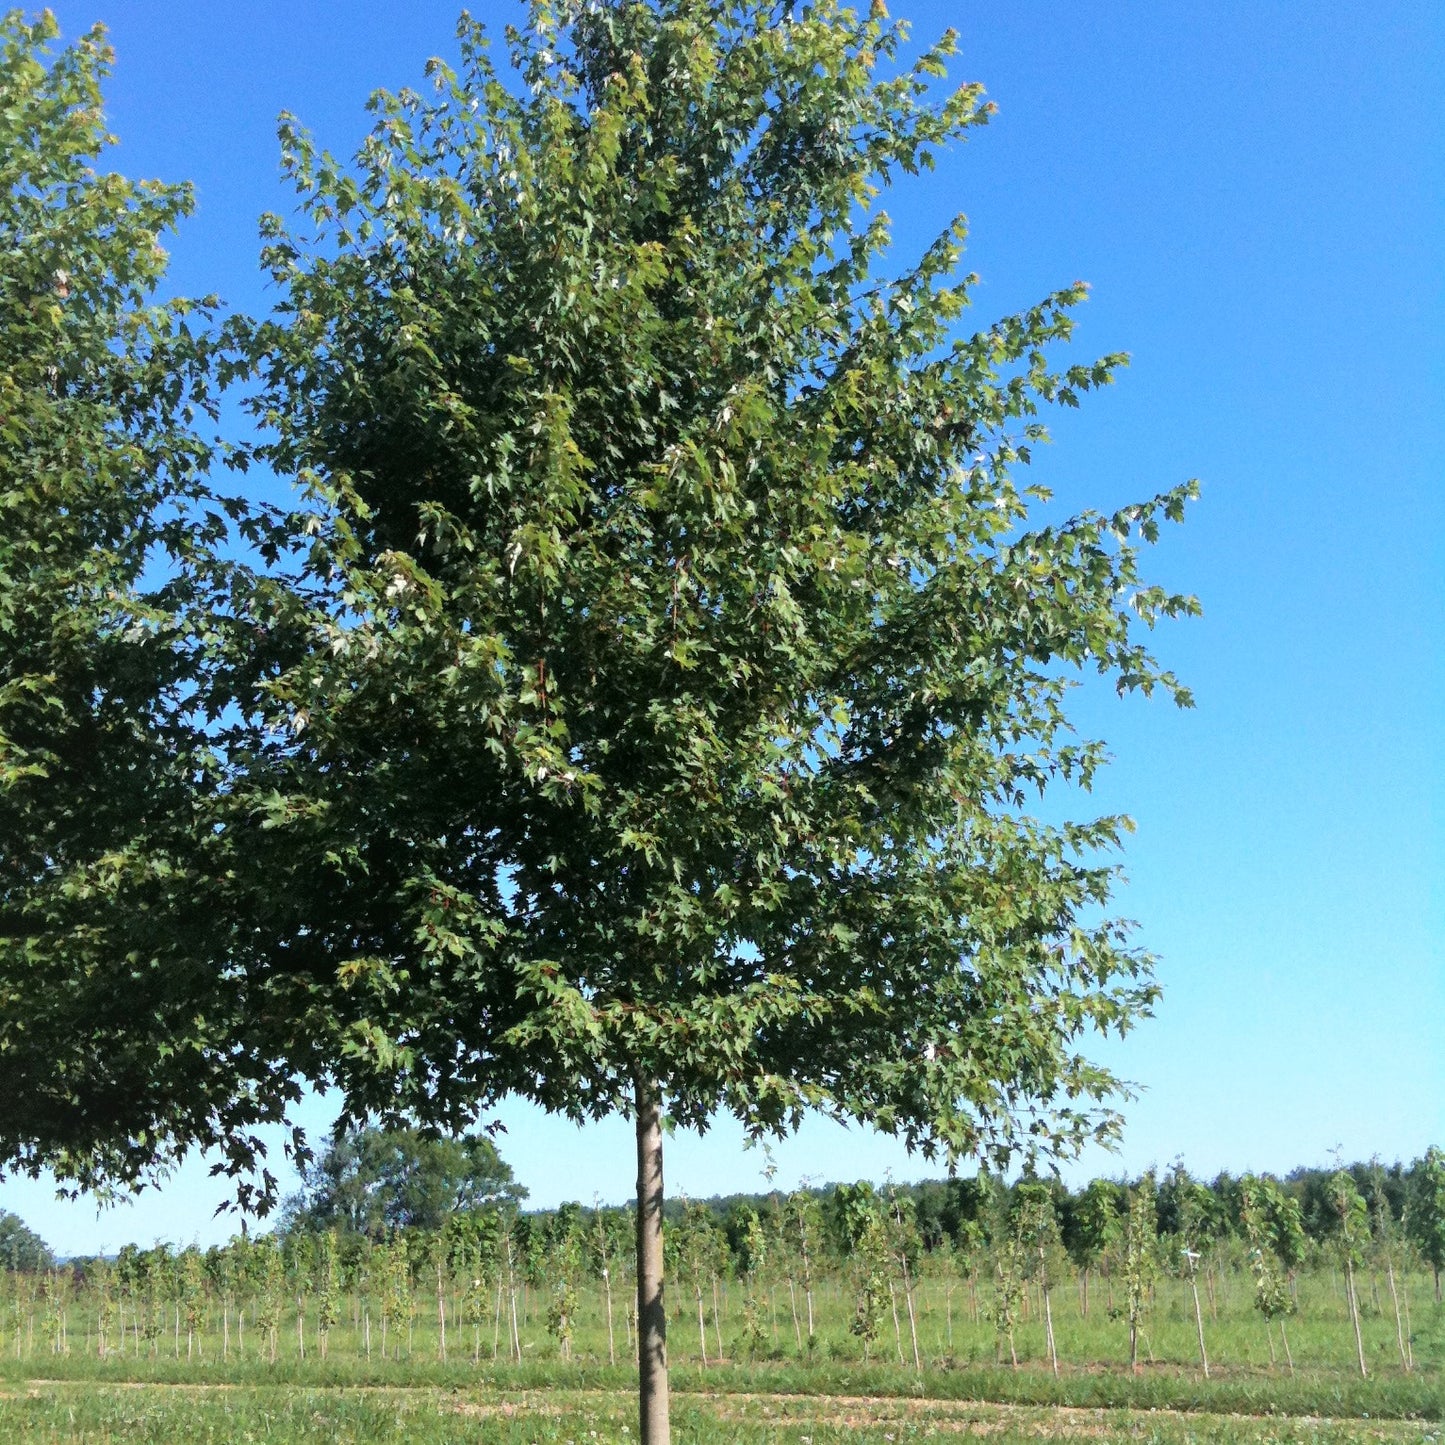 Form of mature Freeman's maple tree